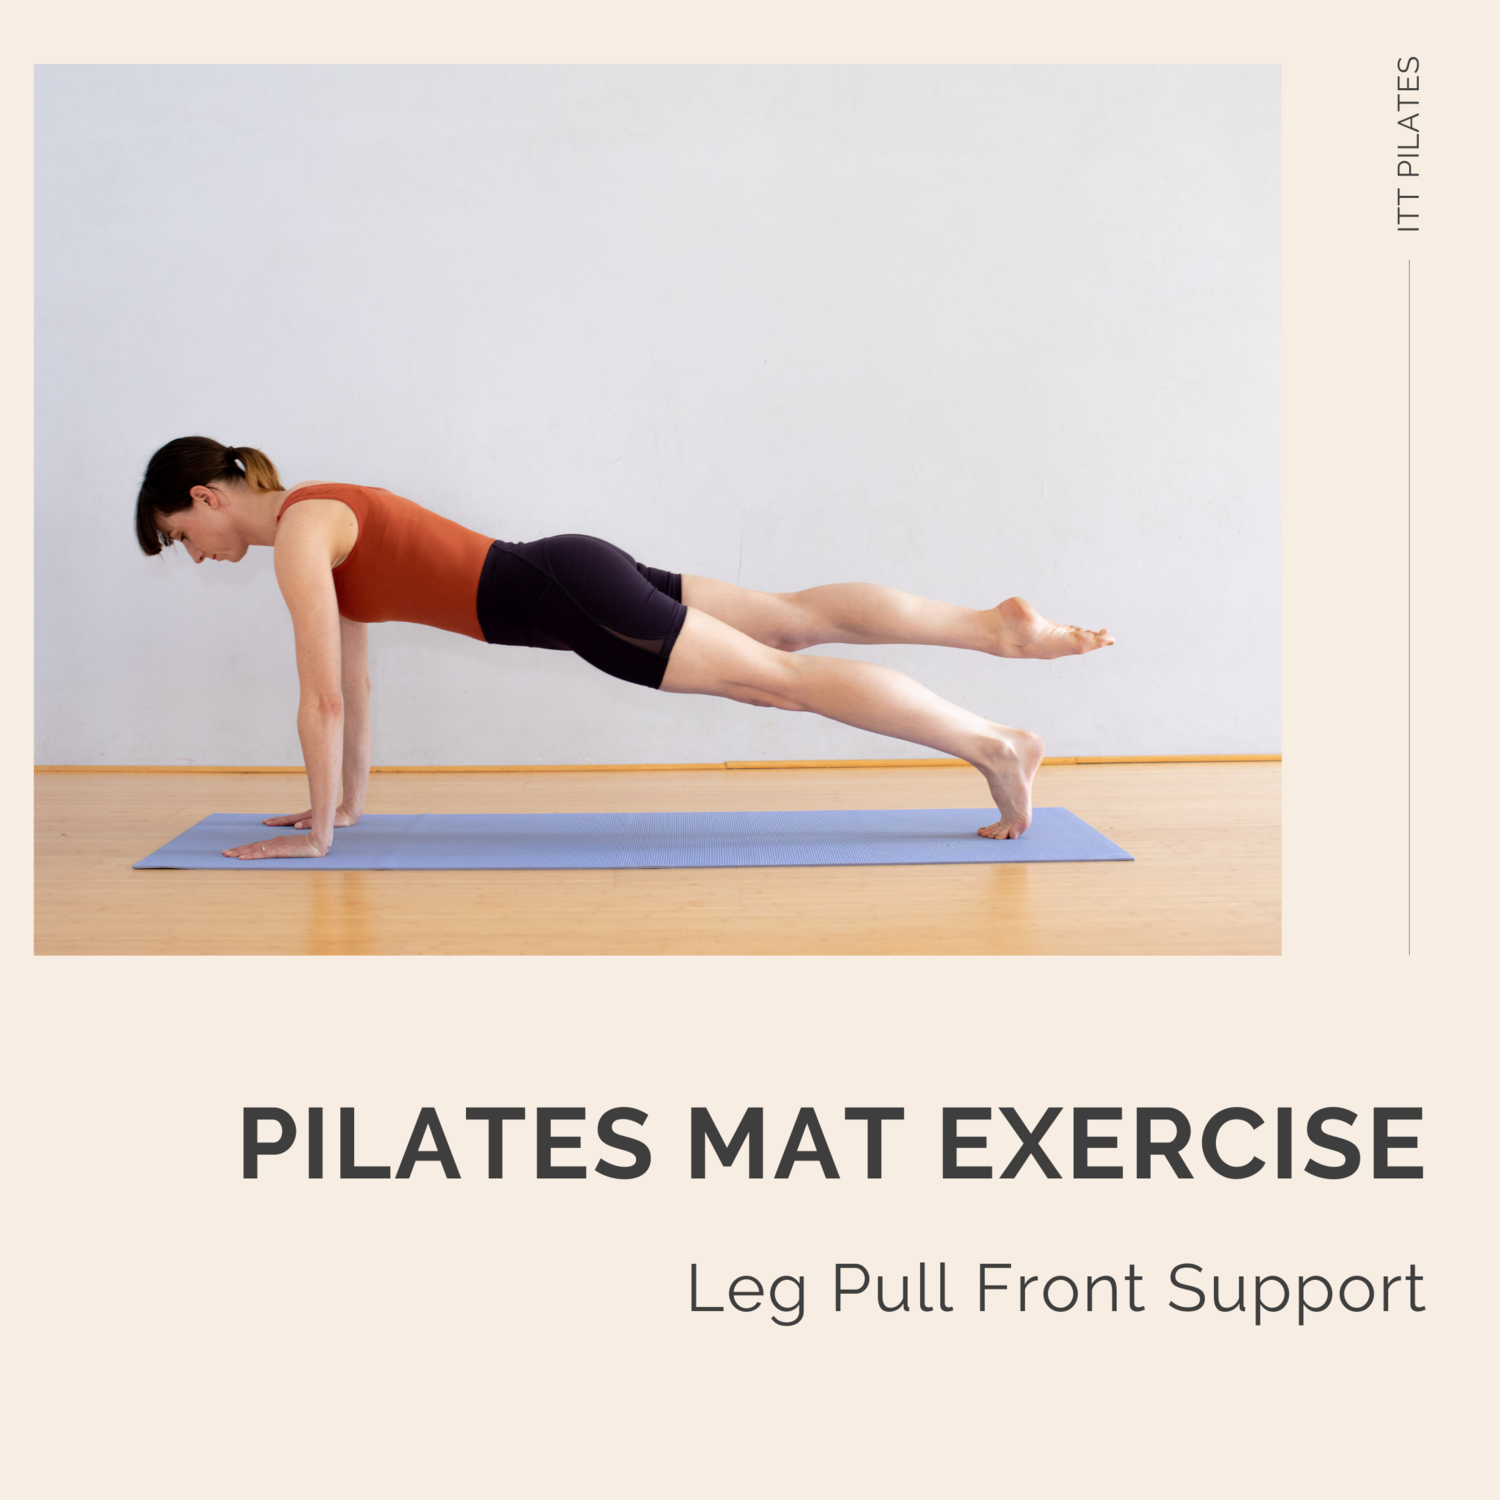 ITT Pilates Exercise: Saw — A Body of Work